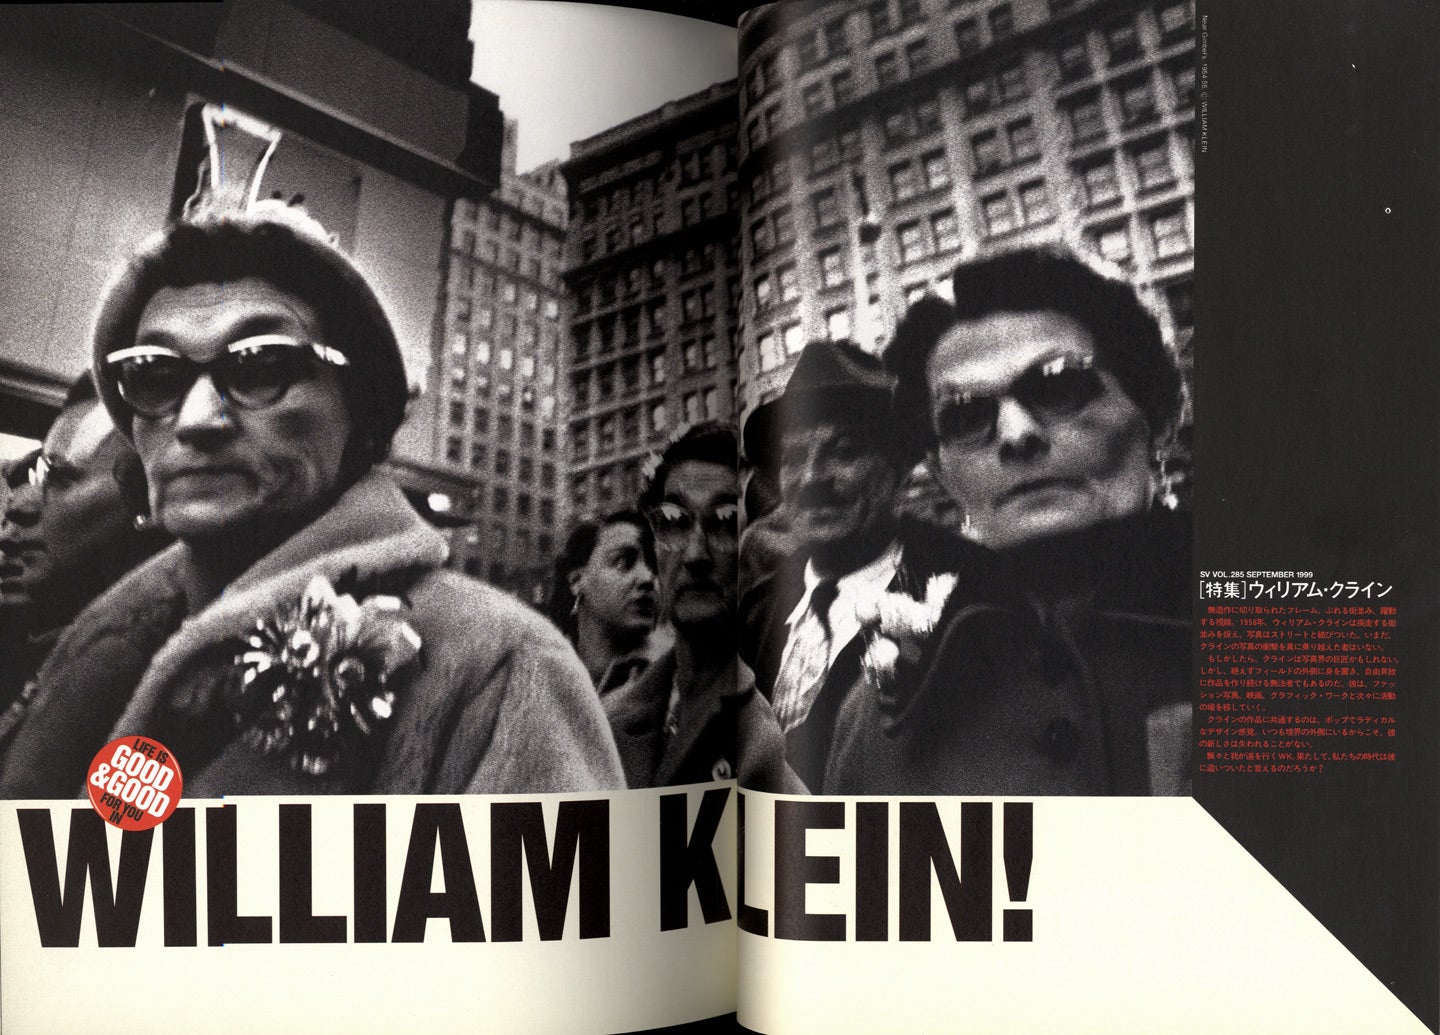 William Klein: "Life Is Good & Good For You in William Klein!" Studio Voice Multi-Media MIx Magazine (Vol. 285, No. 9 - September 1999)